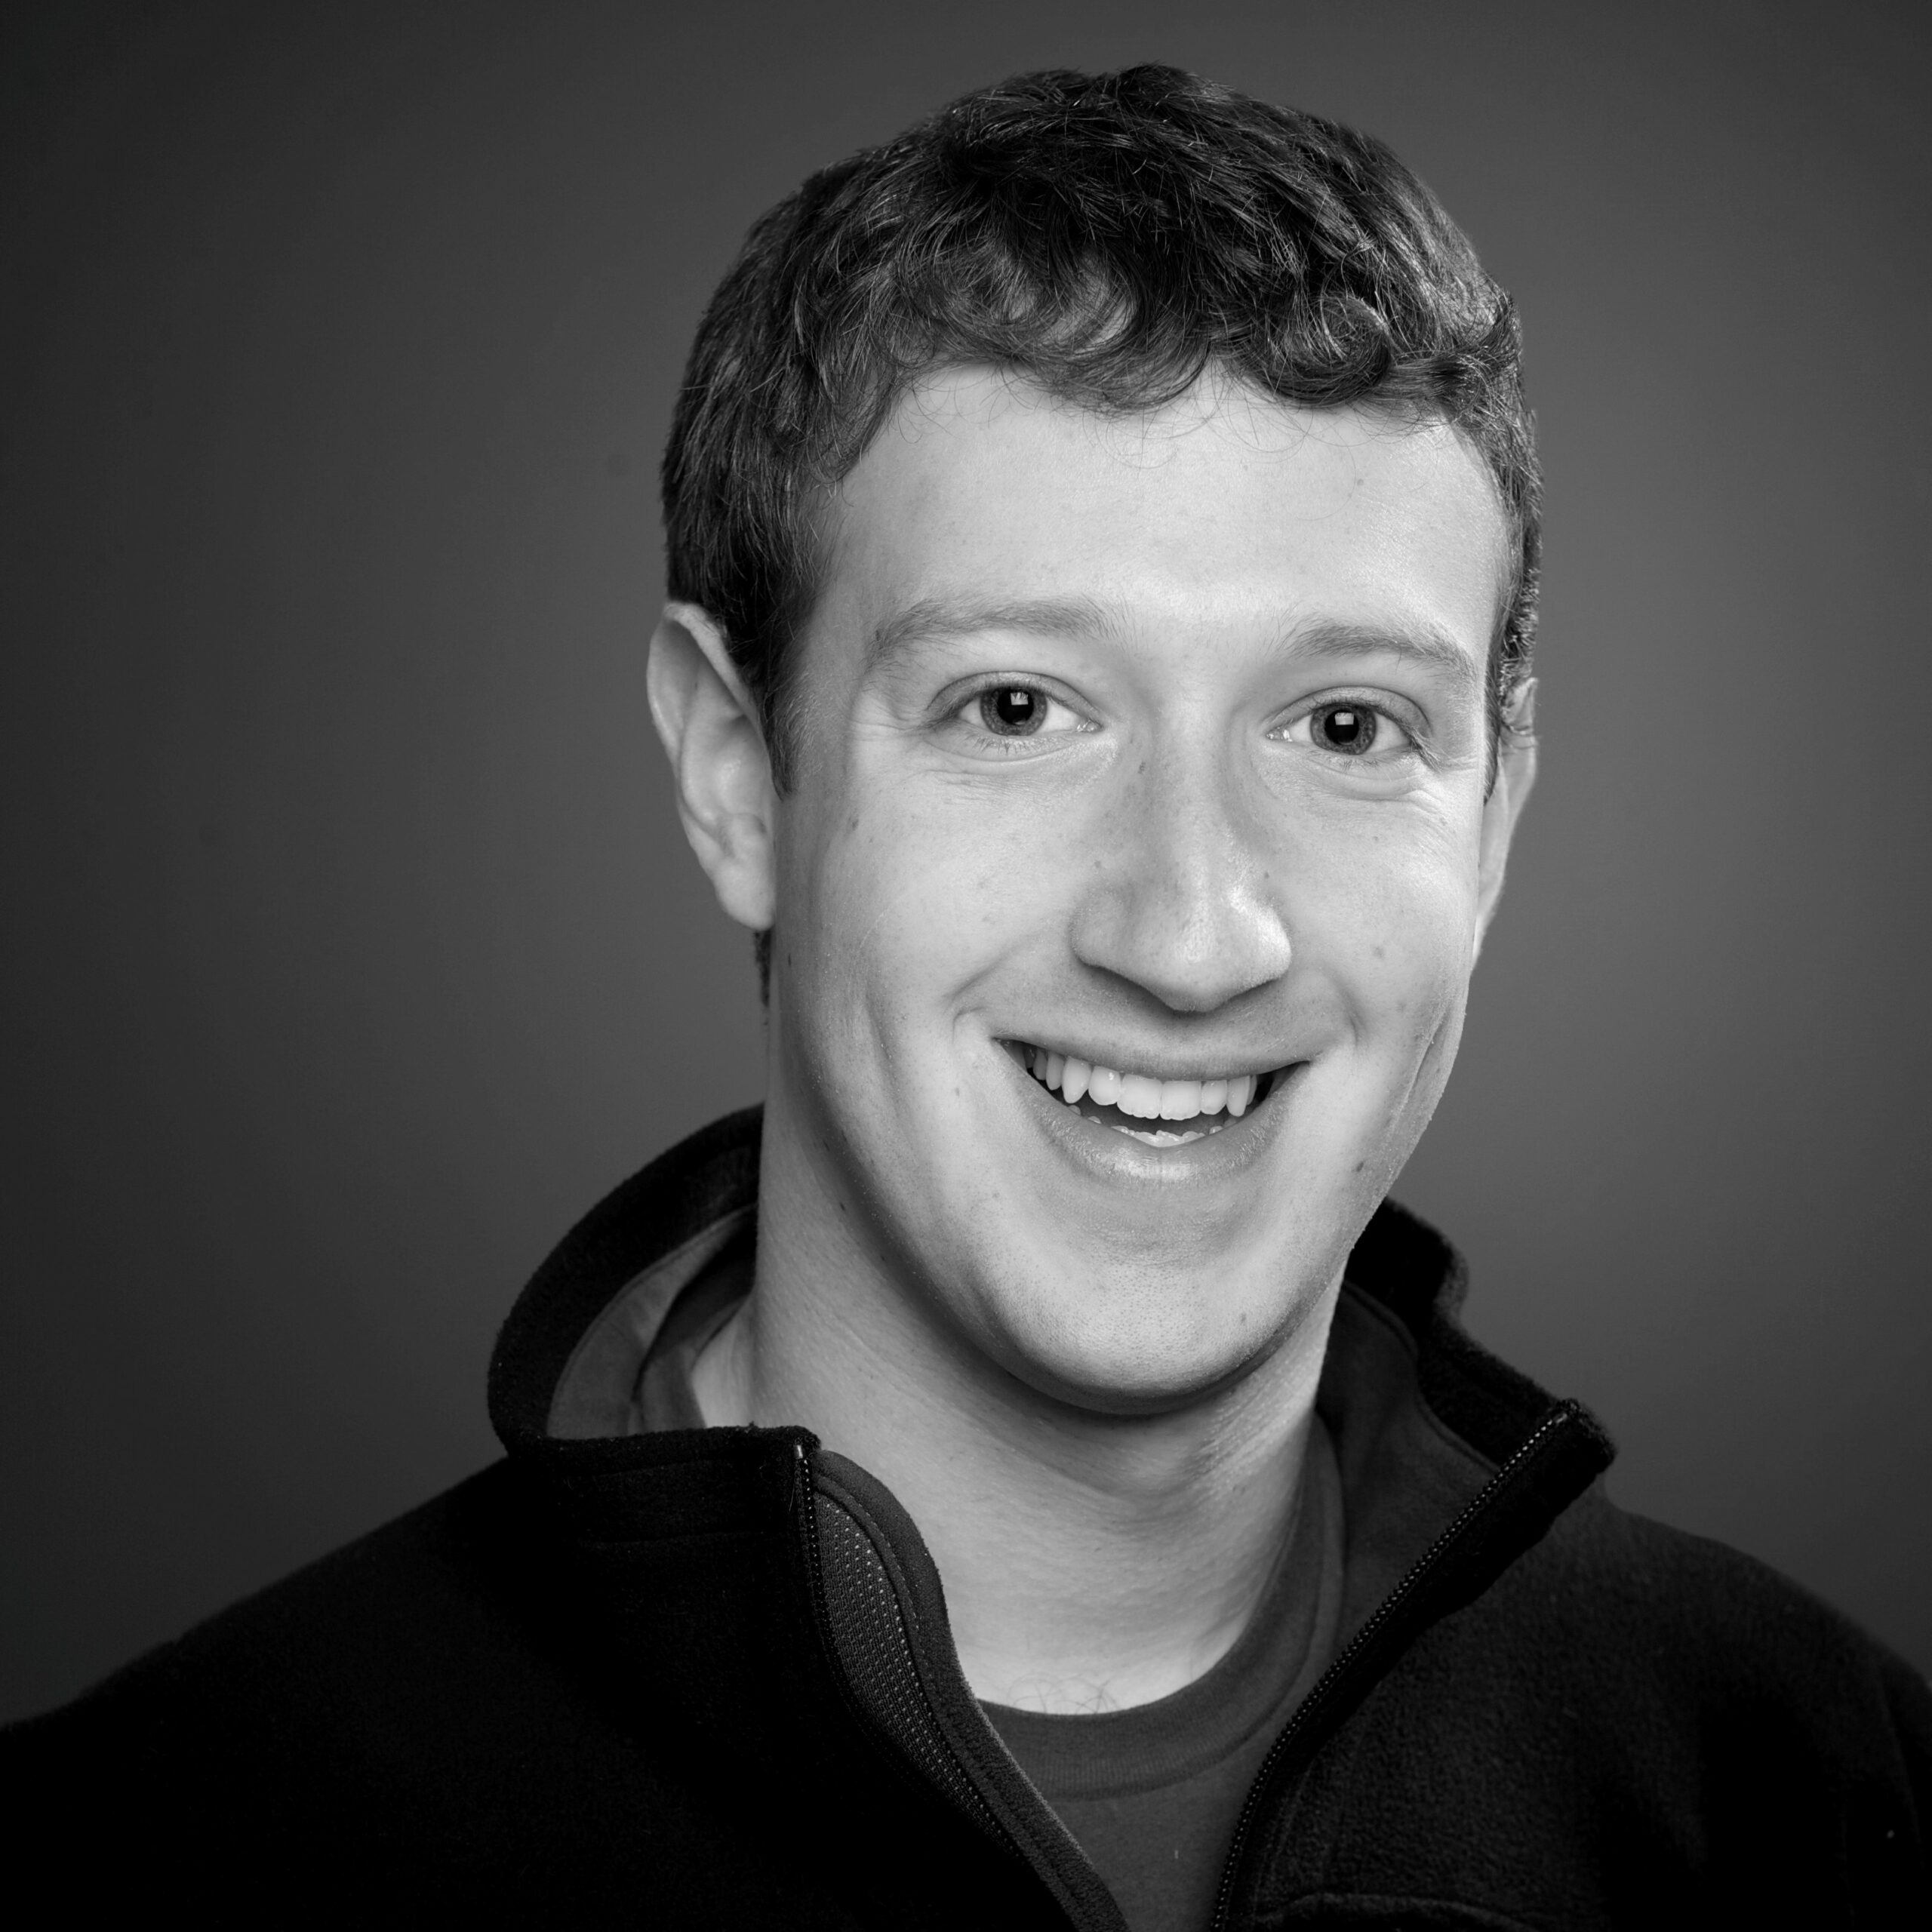 Headshot of a joyful Mark Zuckerberg in a zip-up jacket.